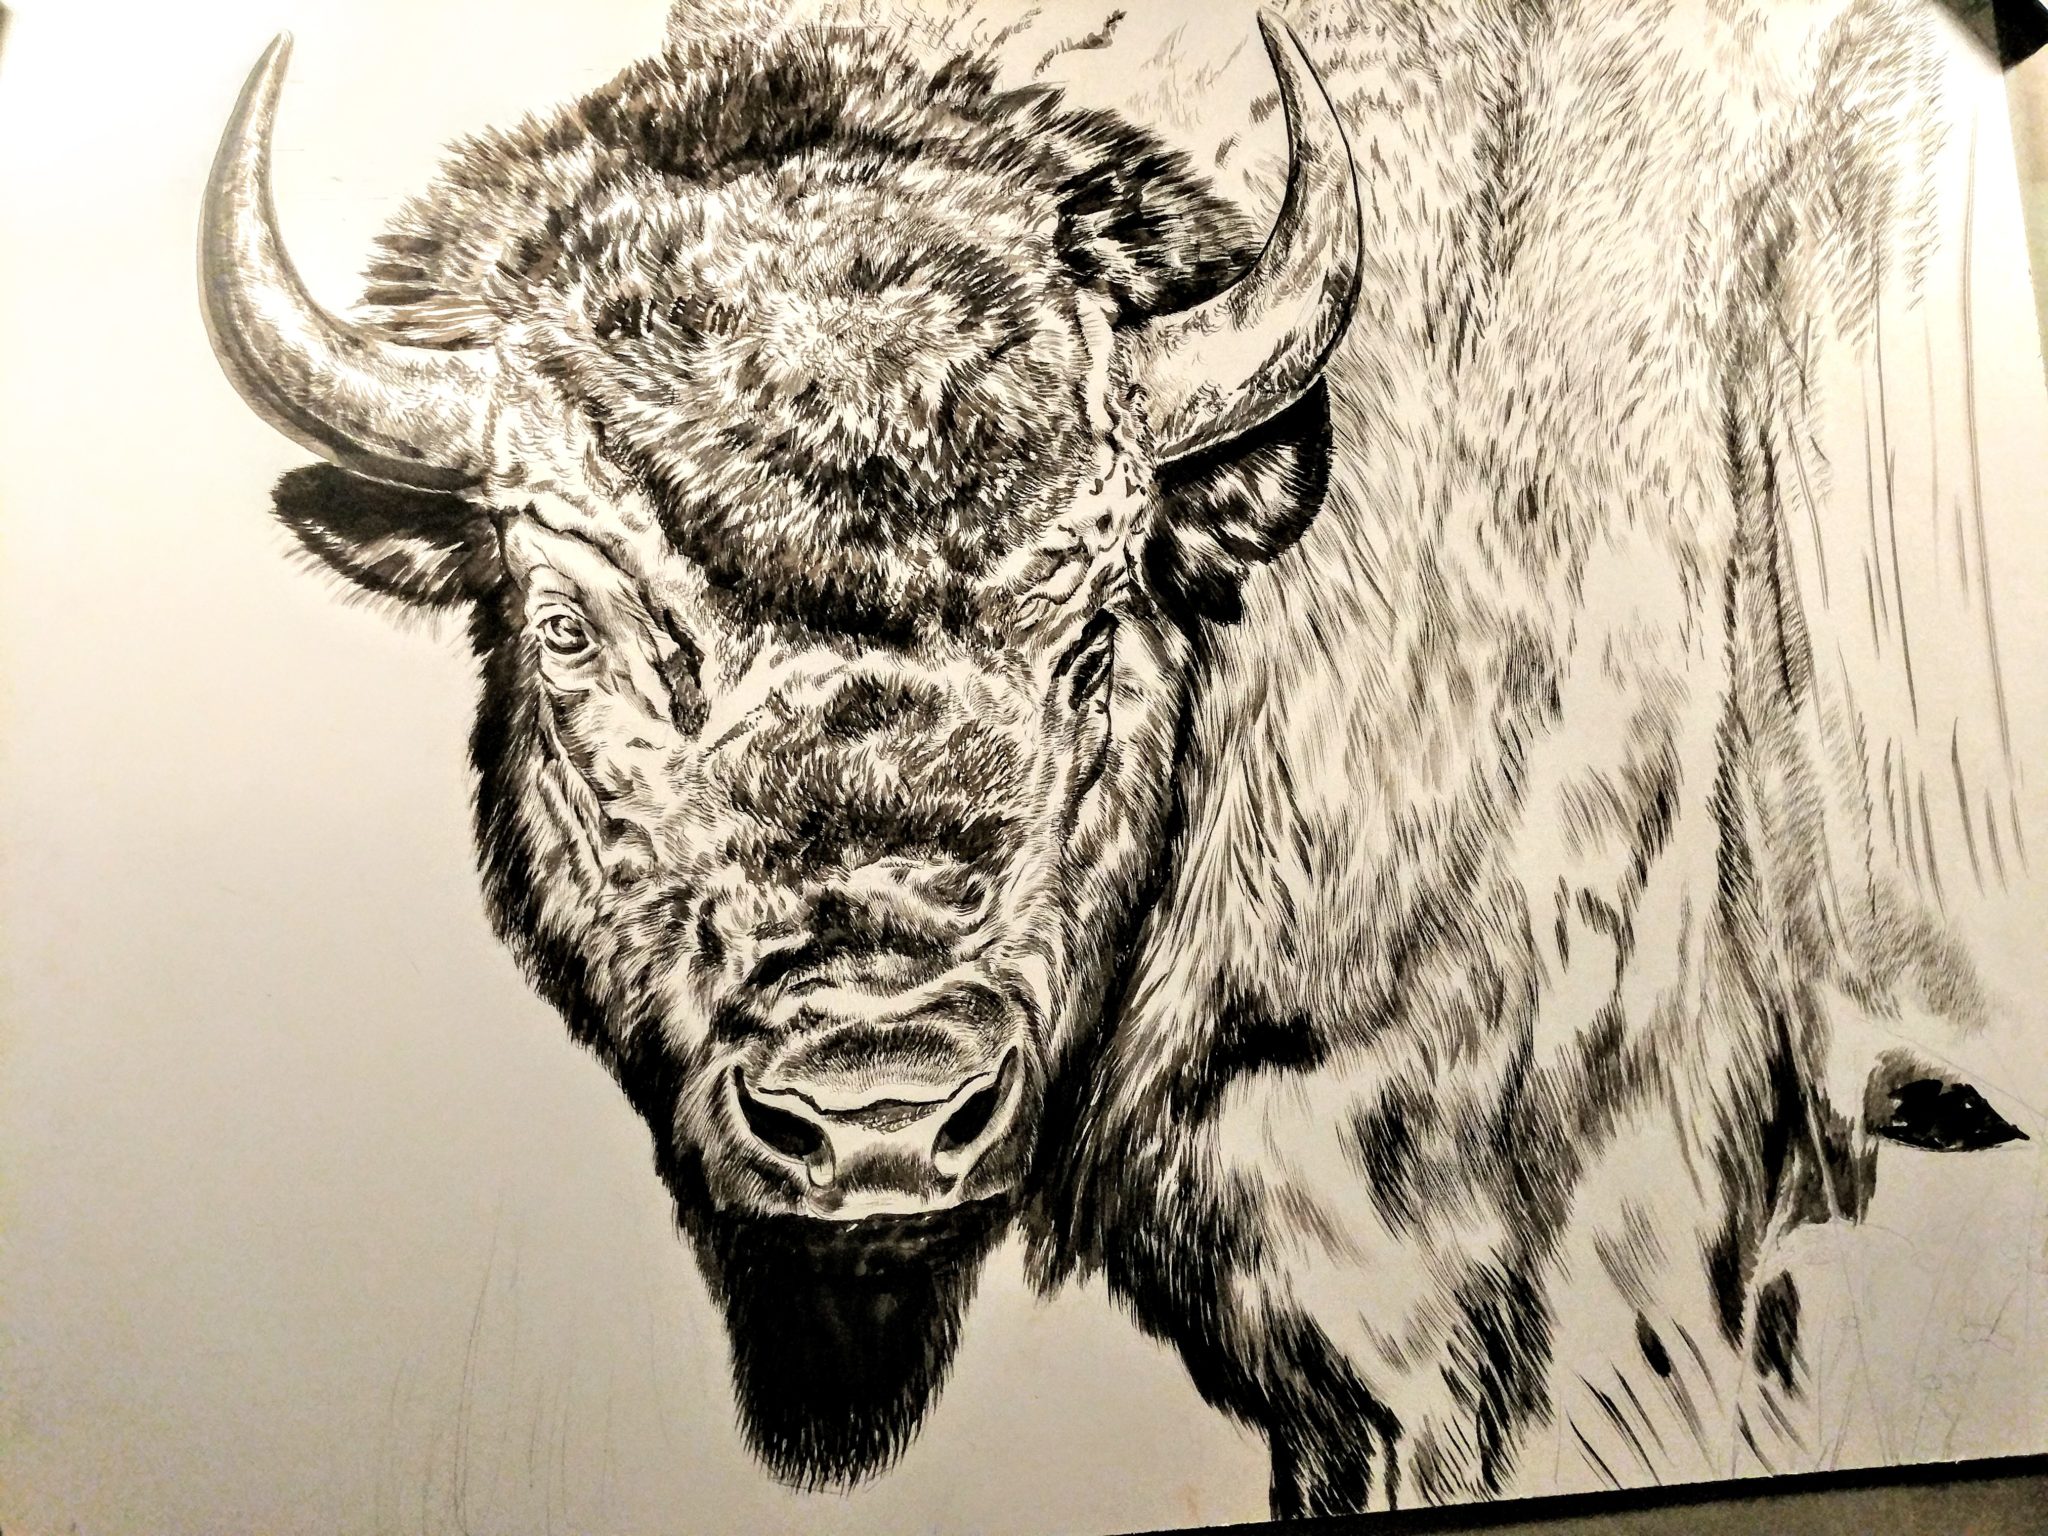 Bull Bison Portrait (Presently Untitled) in progress, 20x24in, watercolor on board